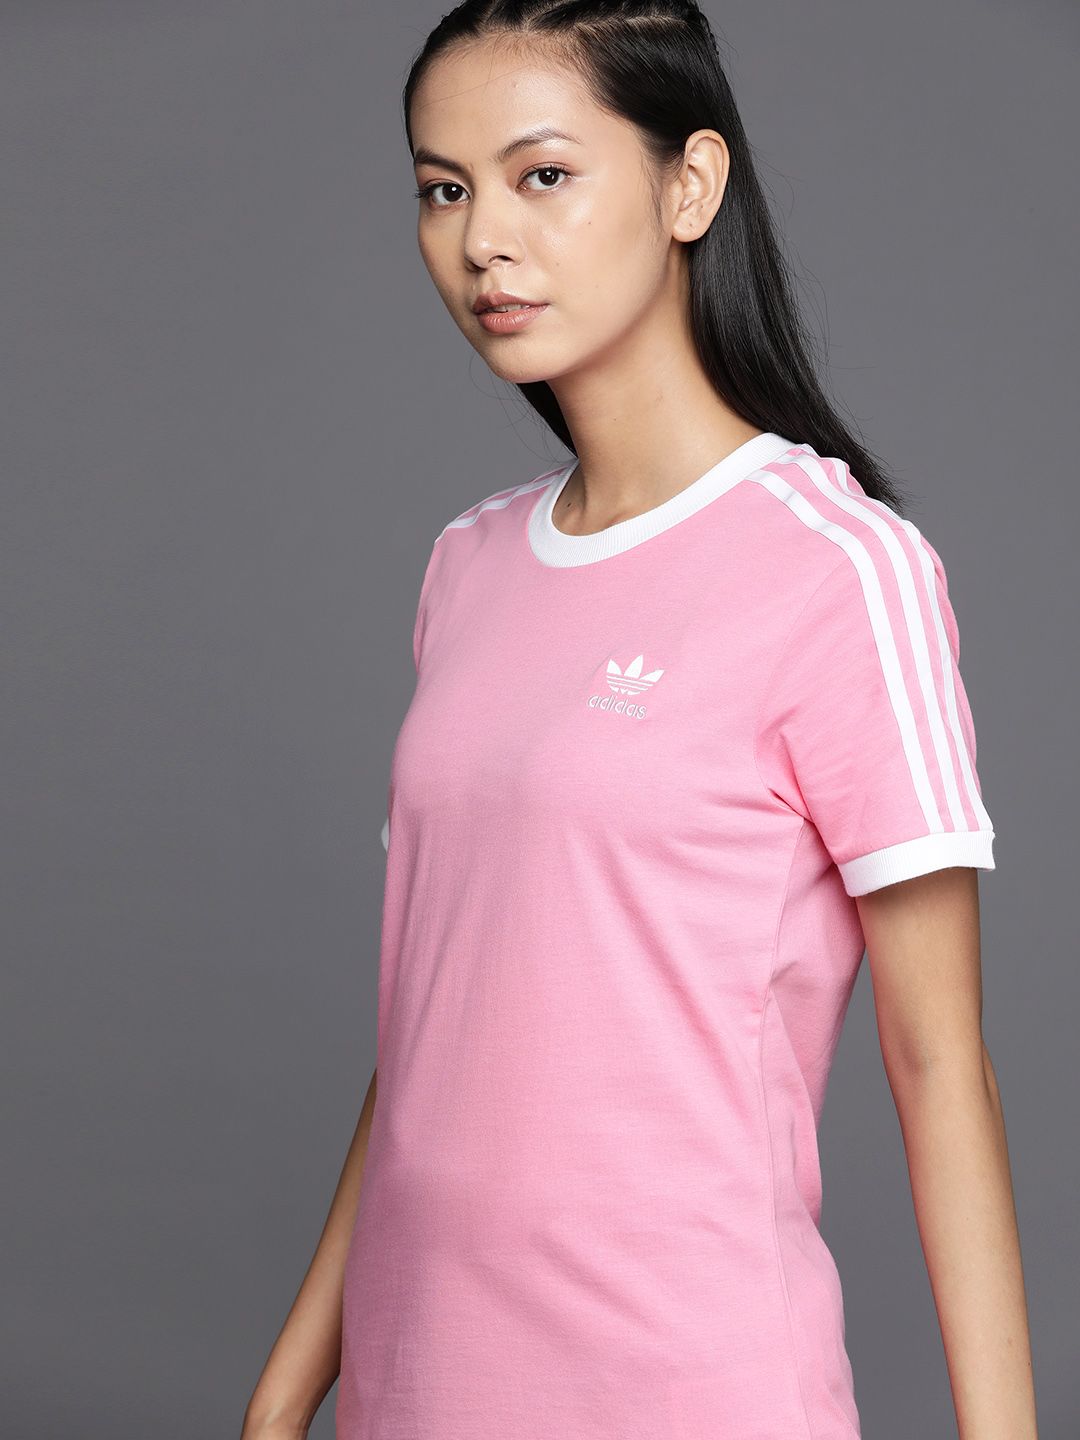 ADIDAS Originals Women Pink Pure Cotton 3-Stripes T-shirt Price in India